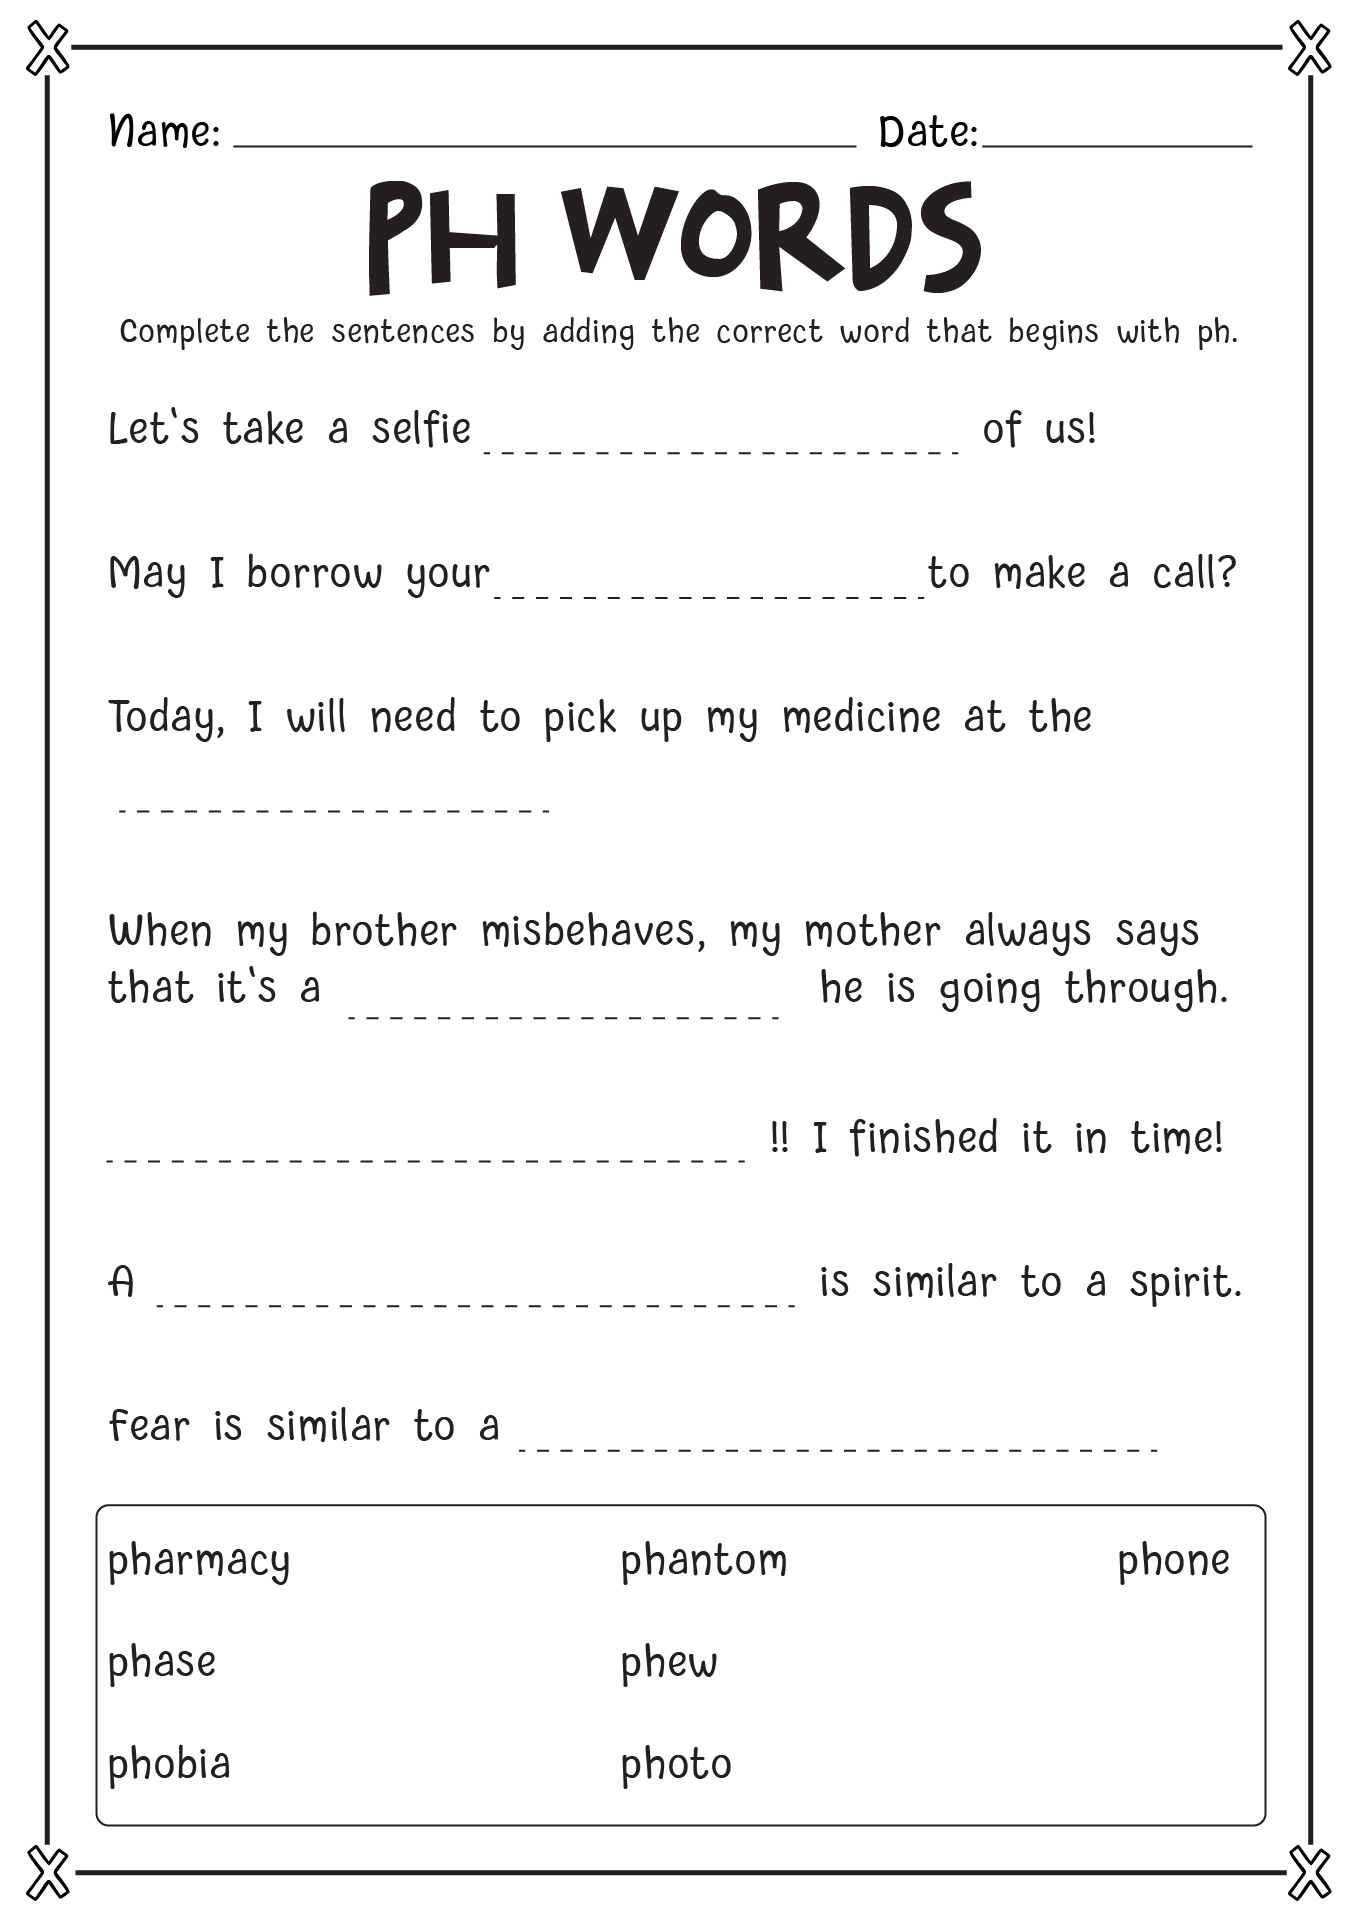 Ph Words Worksheets Image